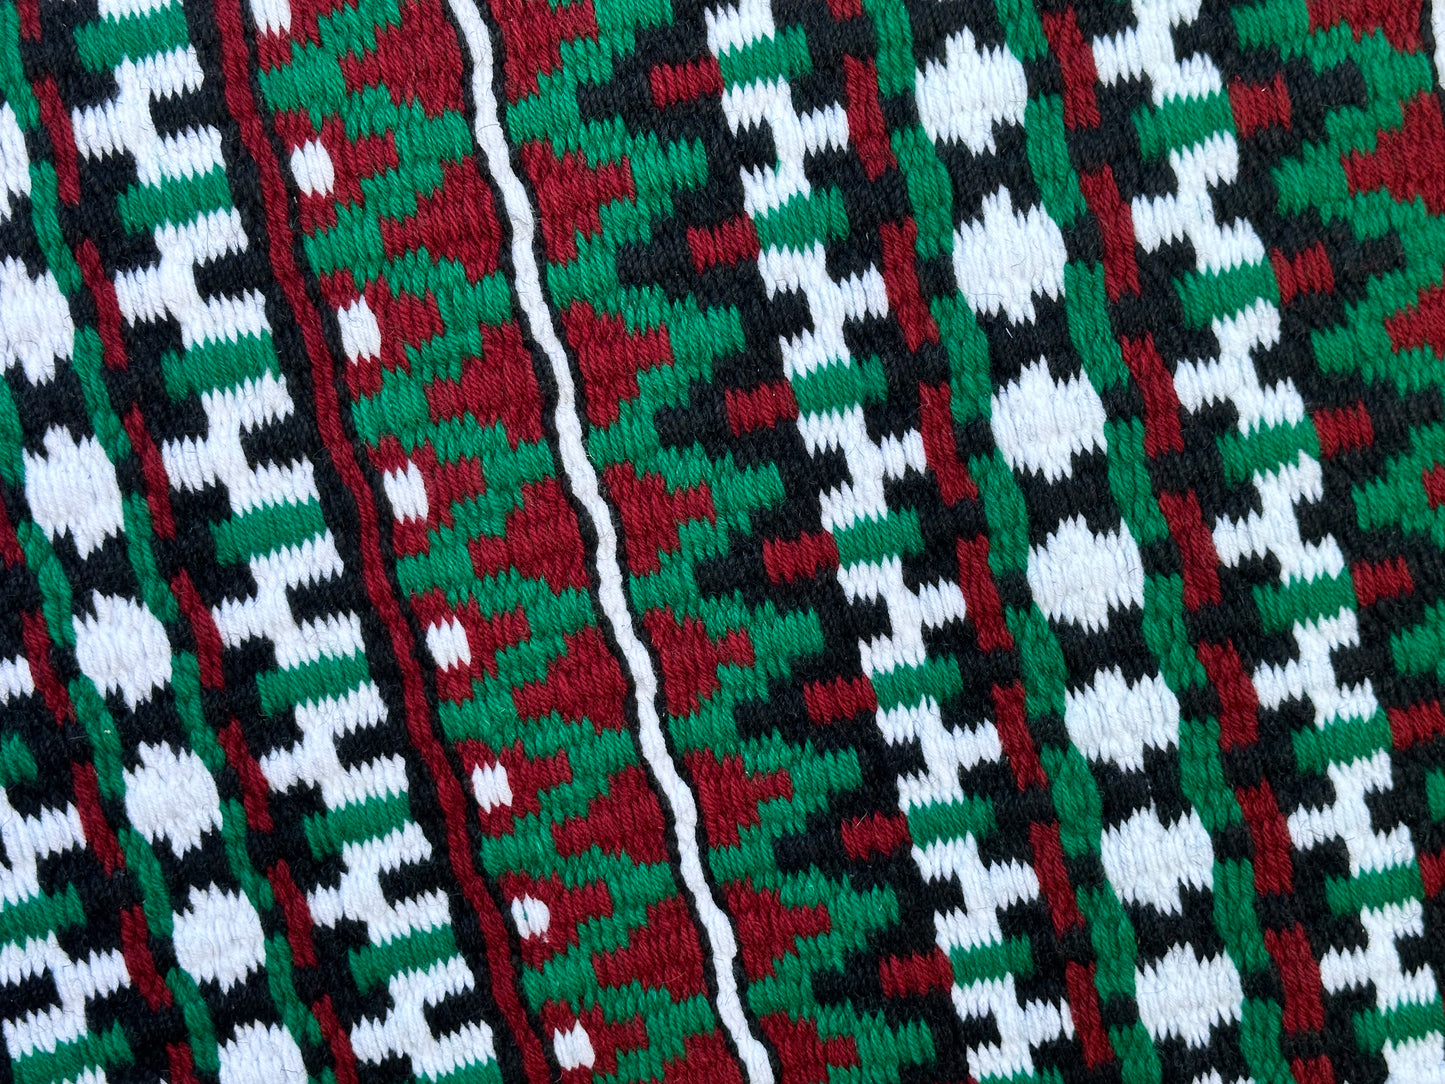 42. Oversized saddle blanket black Kelly green Tibetan red white